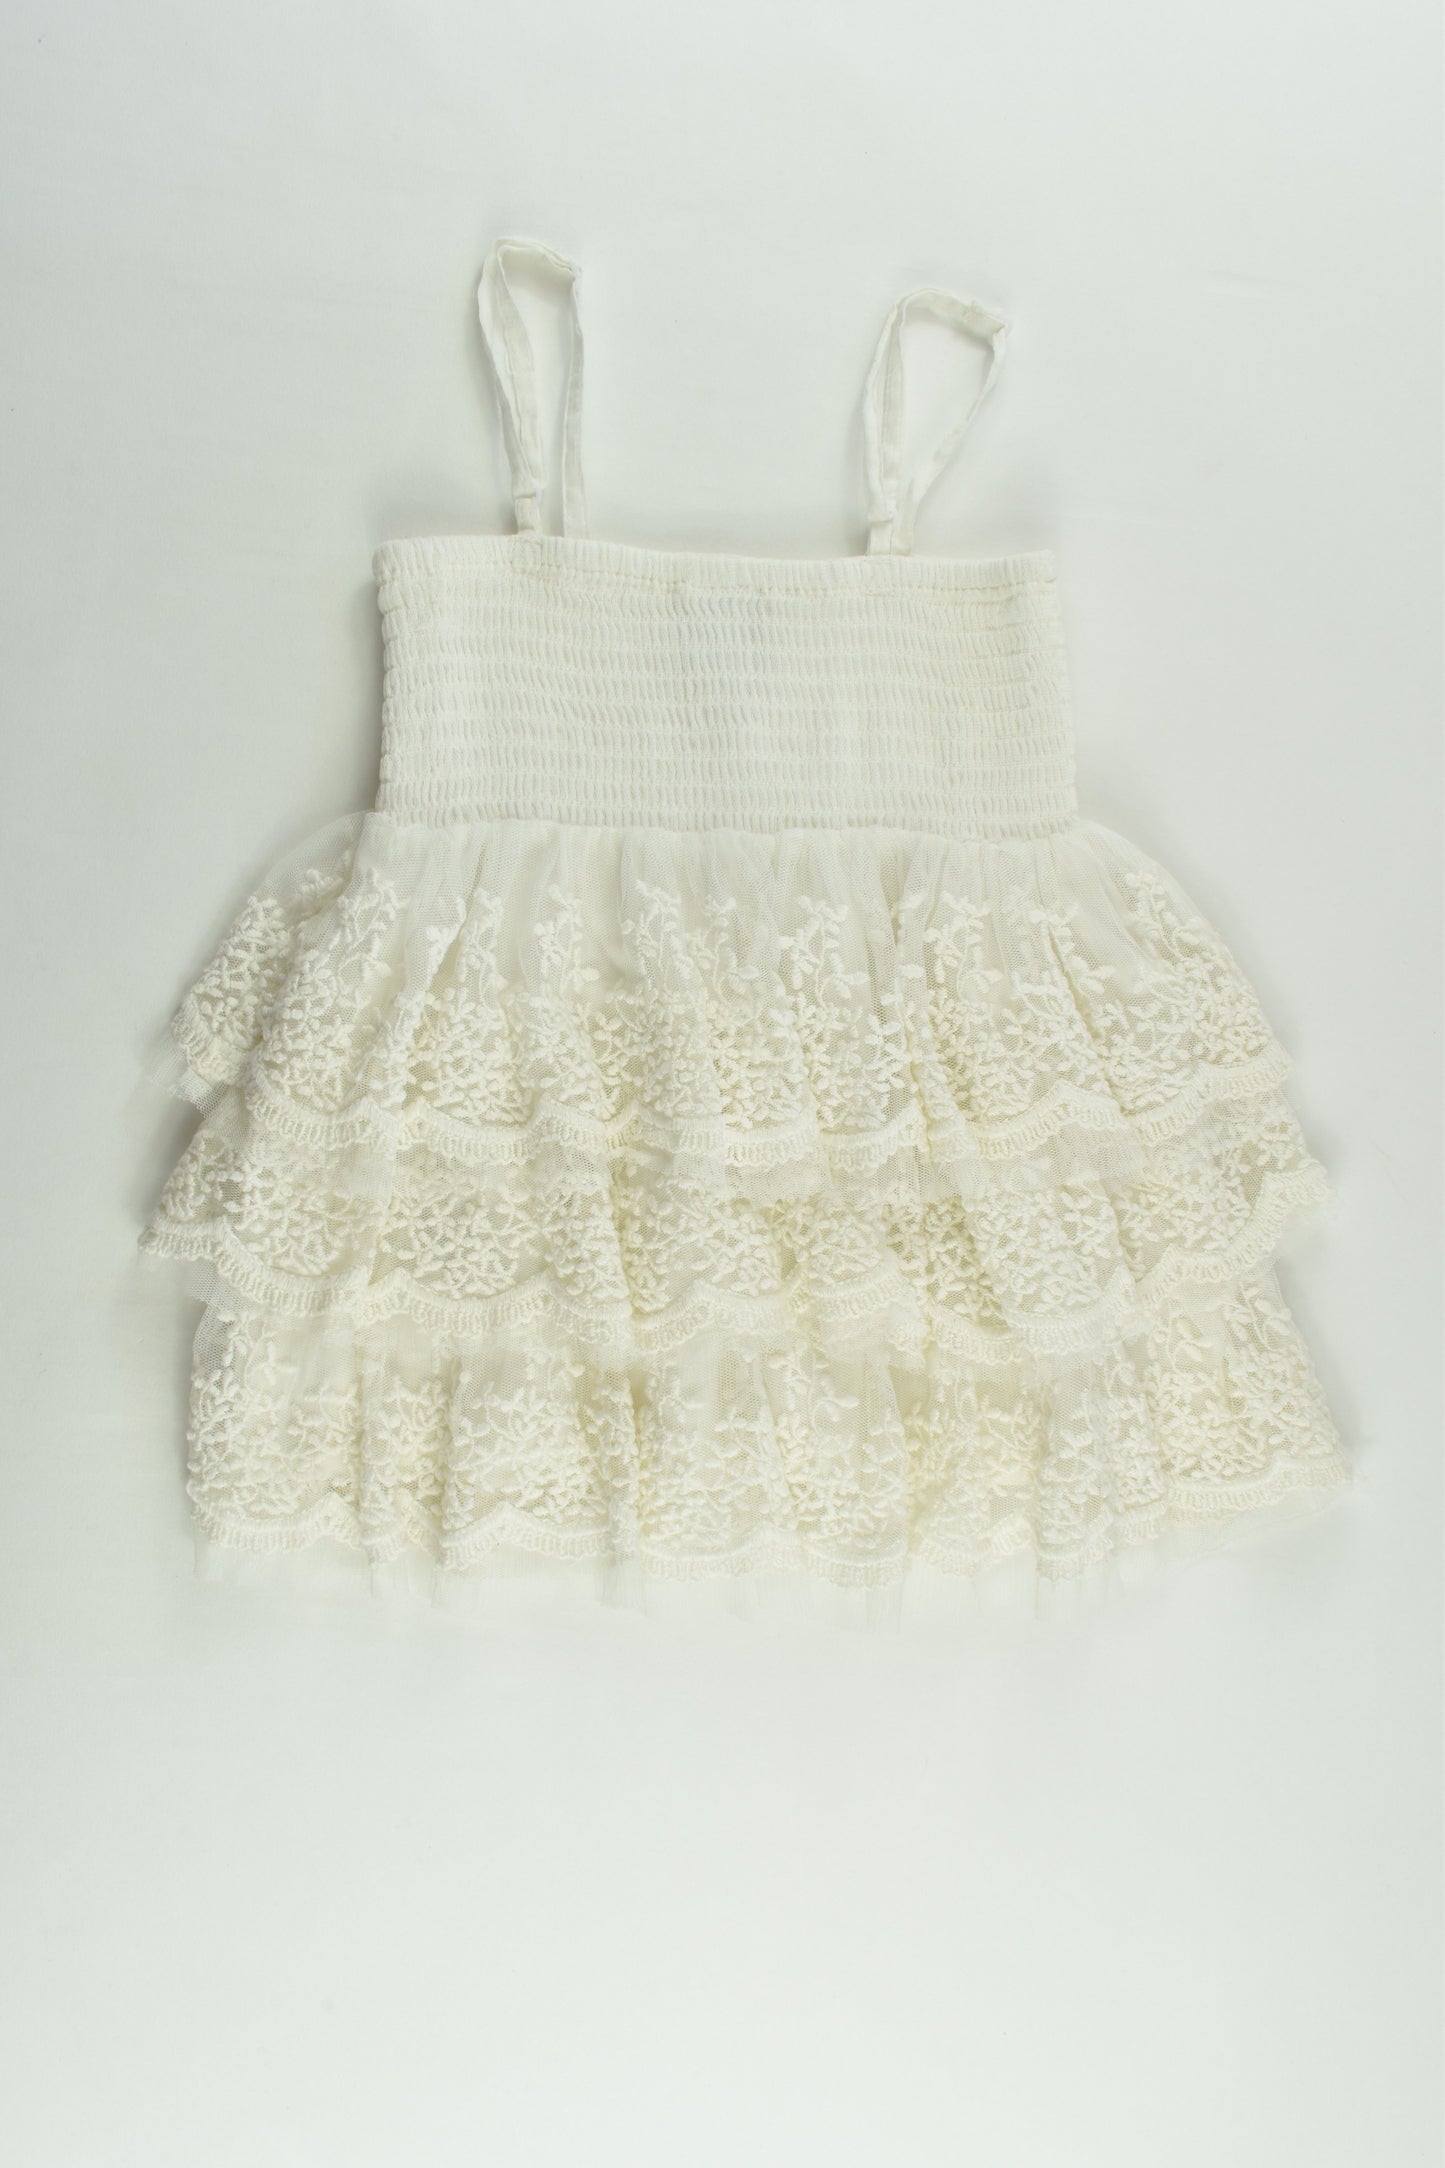 Zara Size 5-6 (118 cm) Lined Lace Ruffle Top